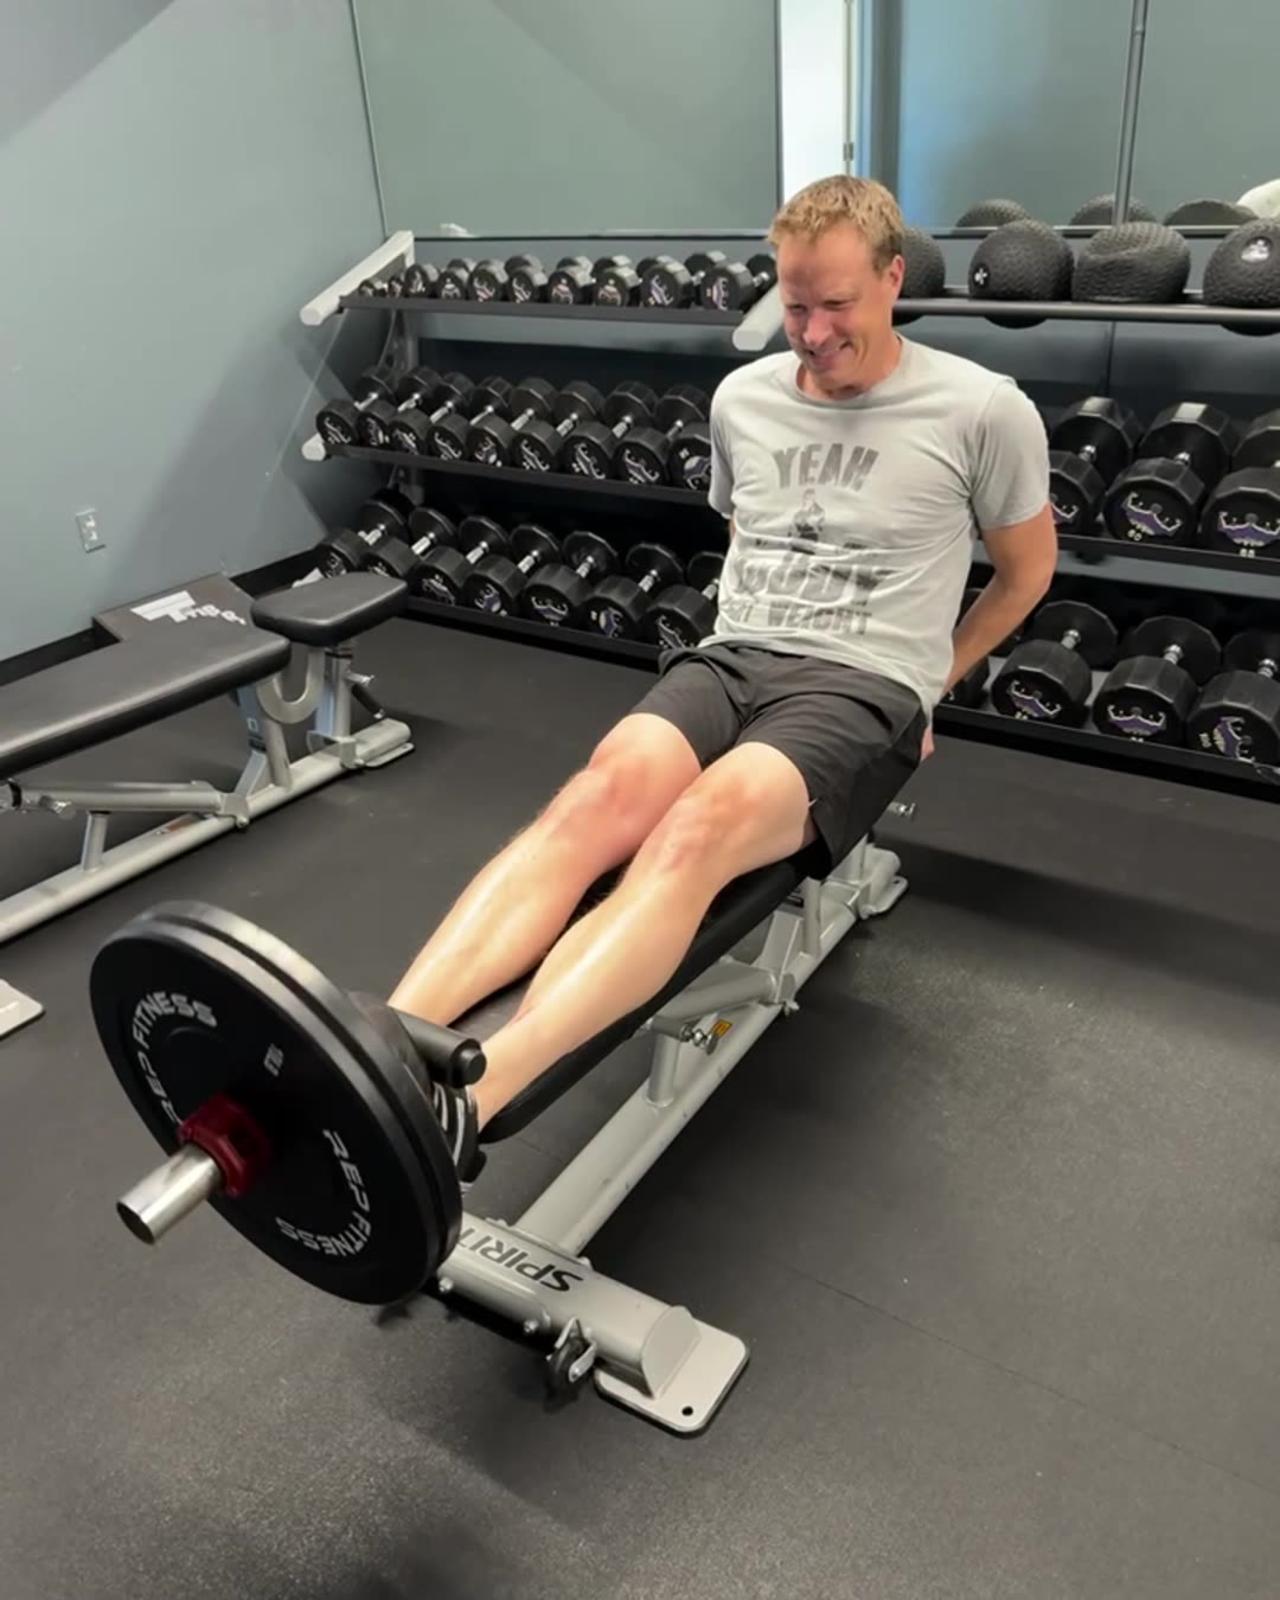 Leg Workout – One News Page VIDEO